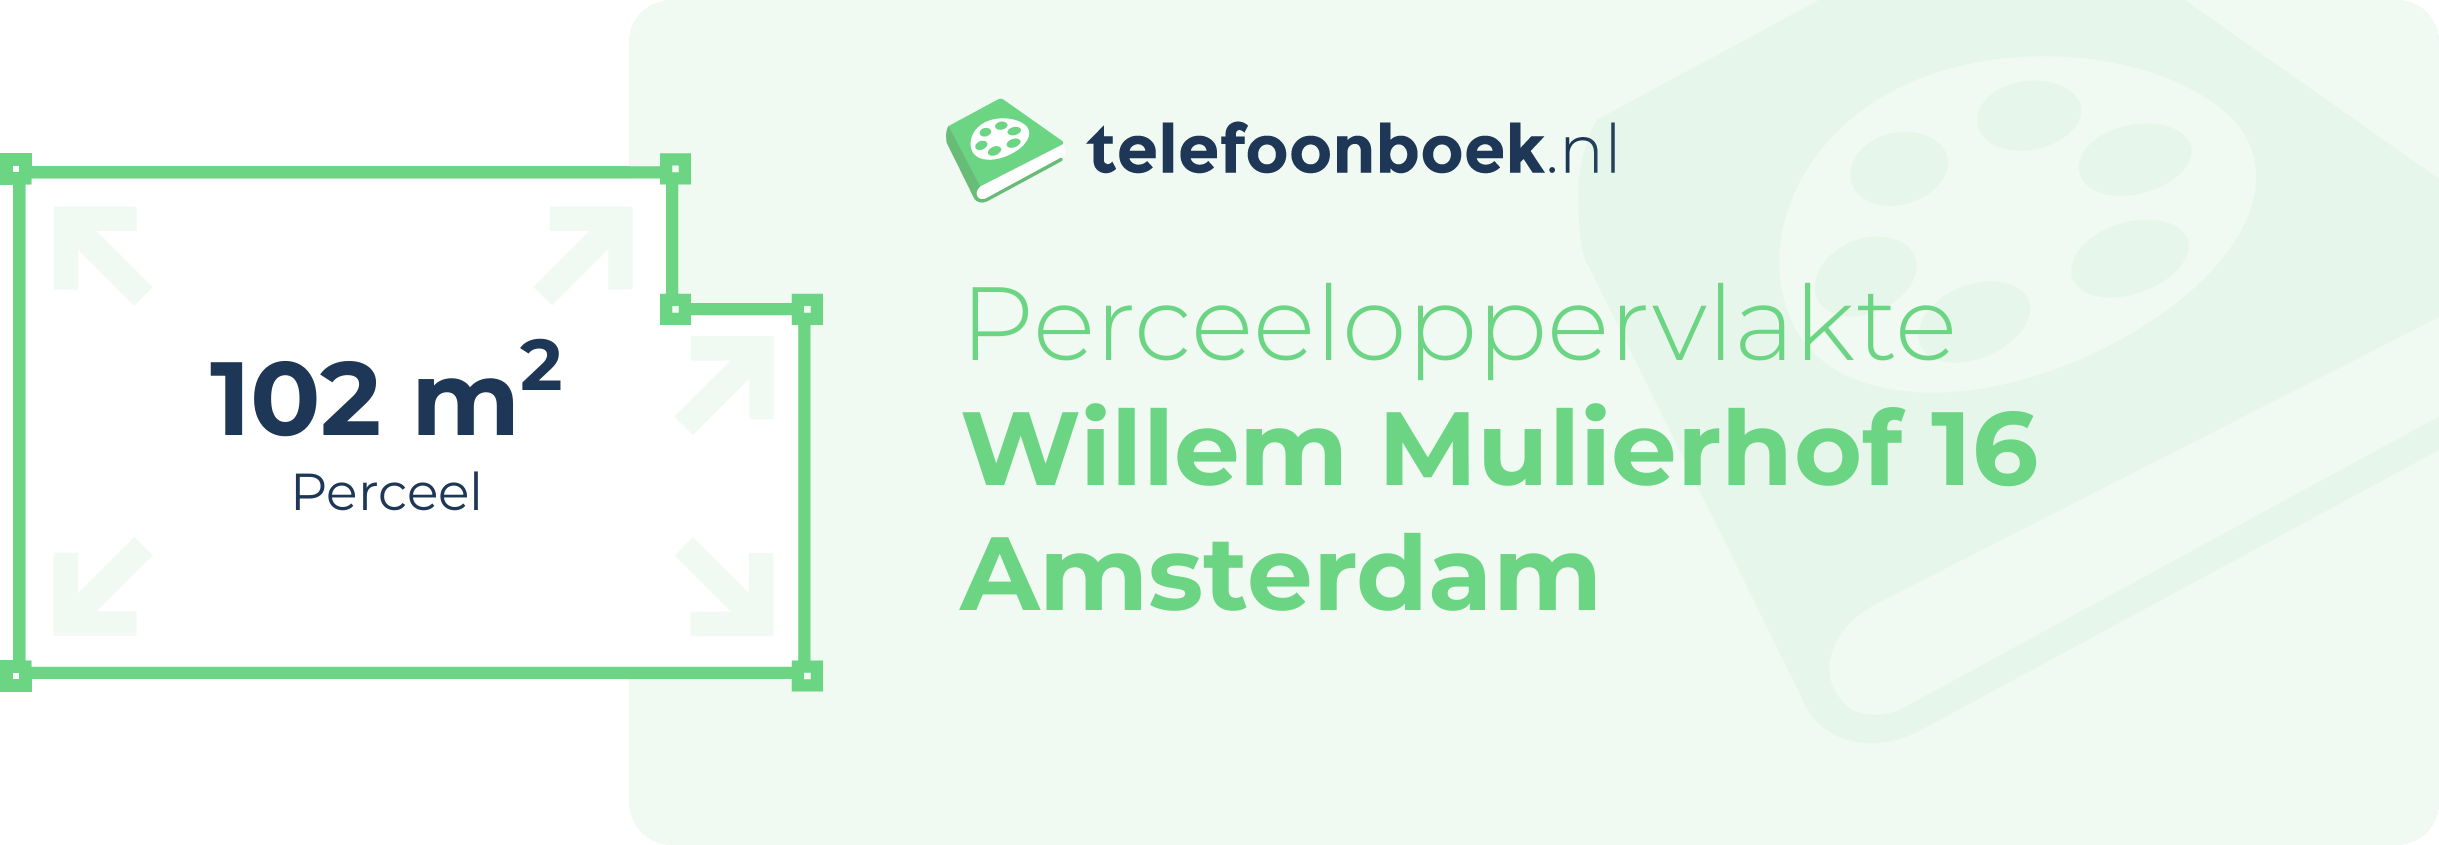 Perceeloppervlakte Willem Mulierhof 16 Amsterdam